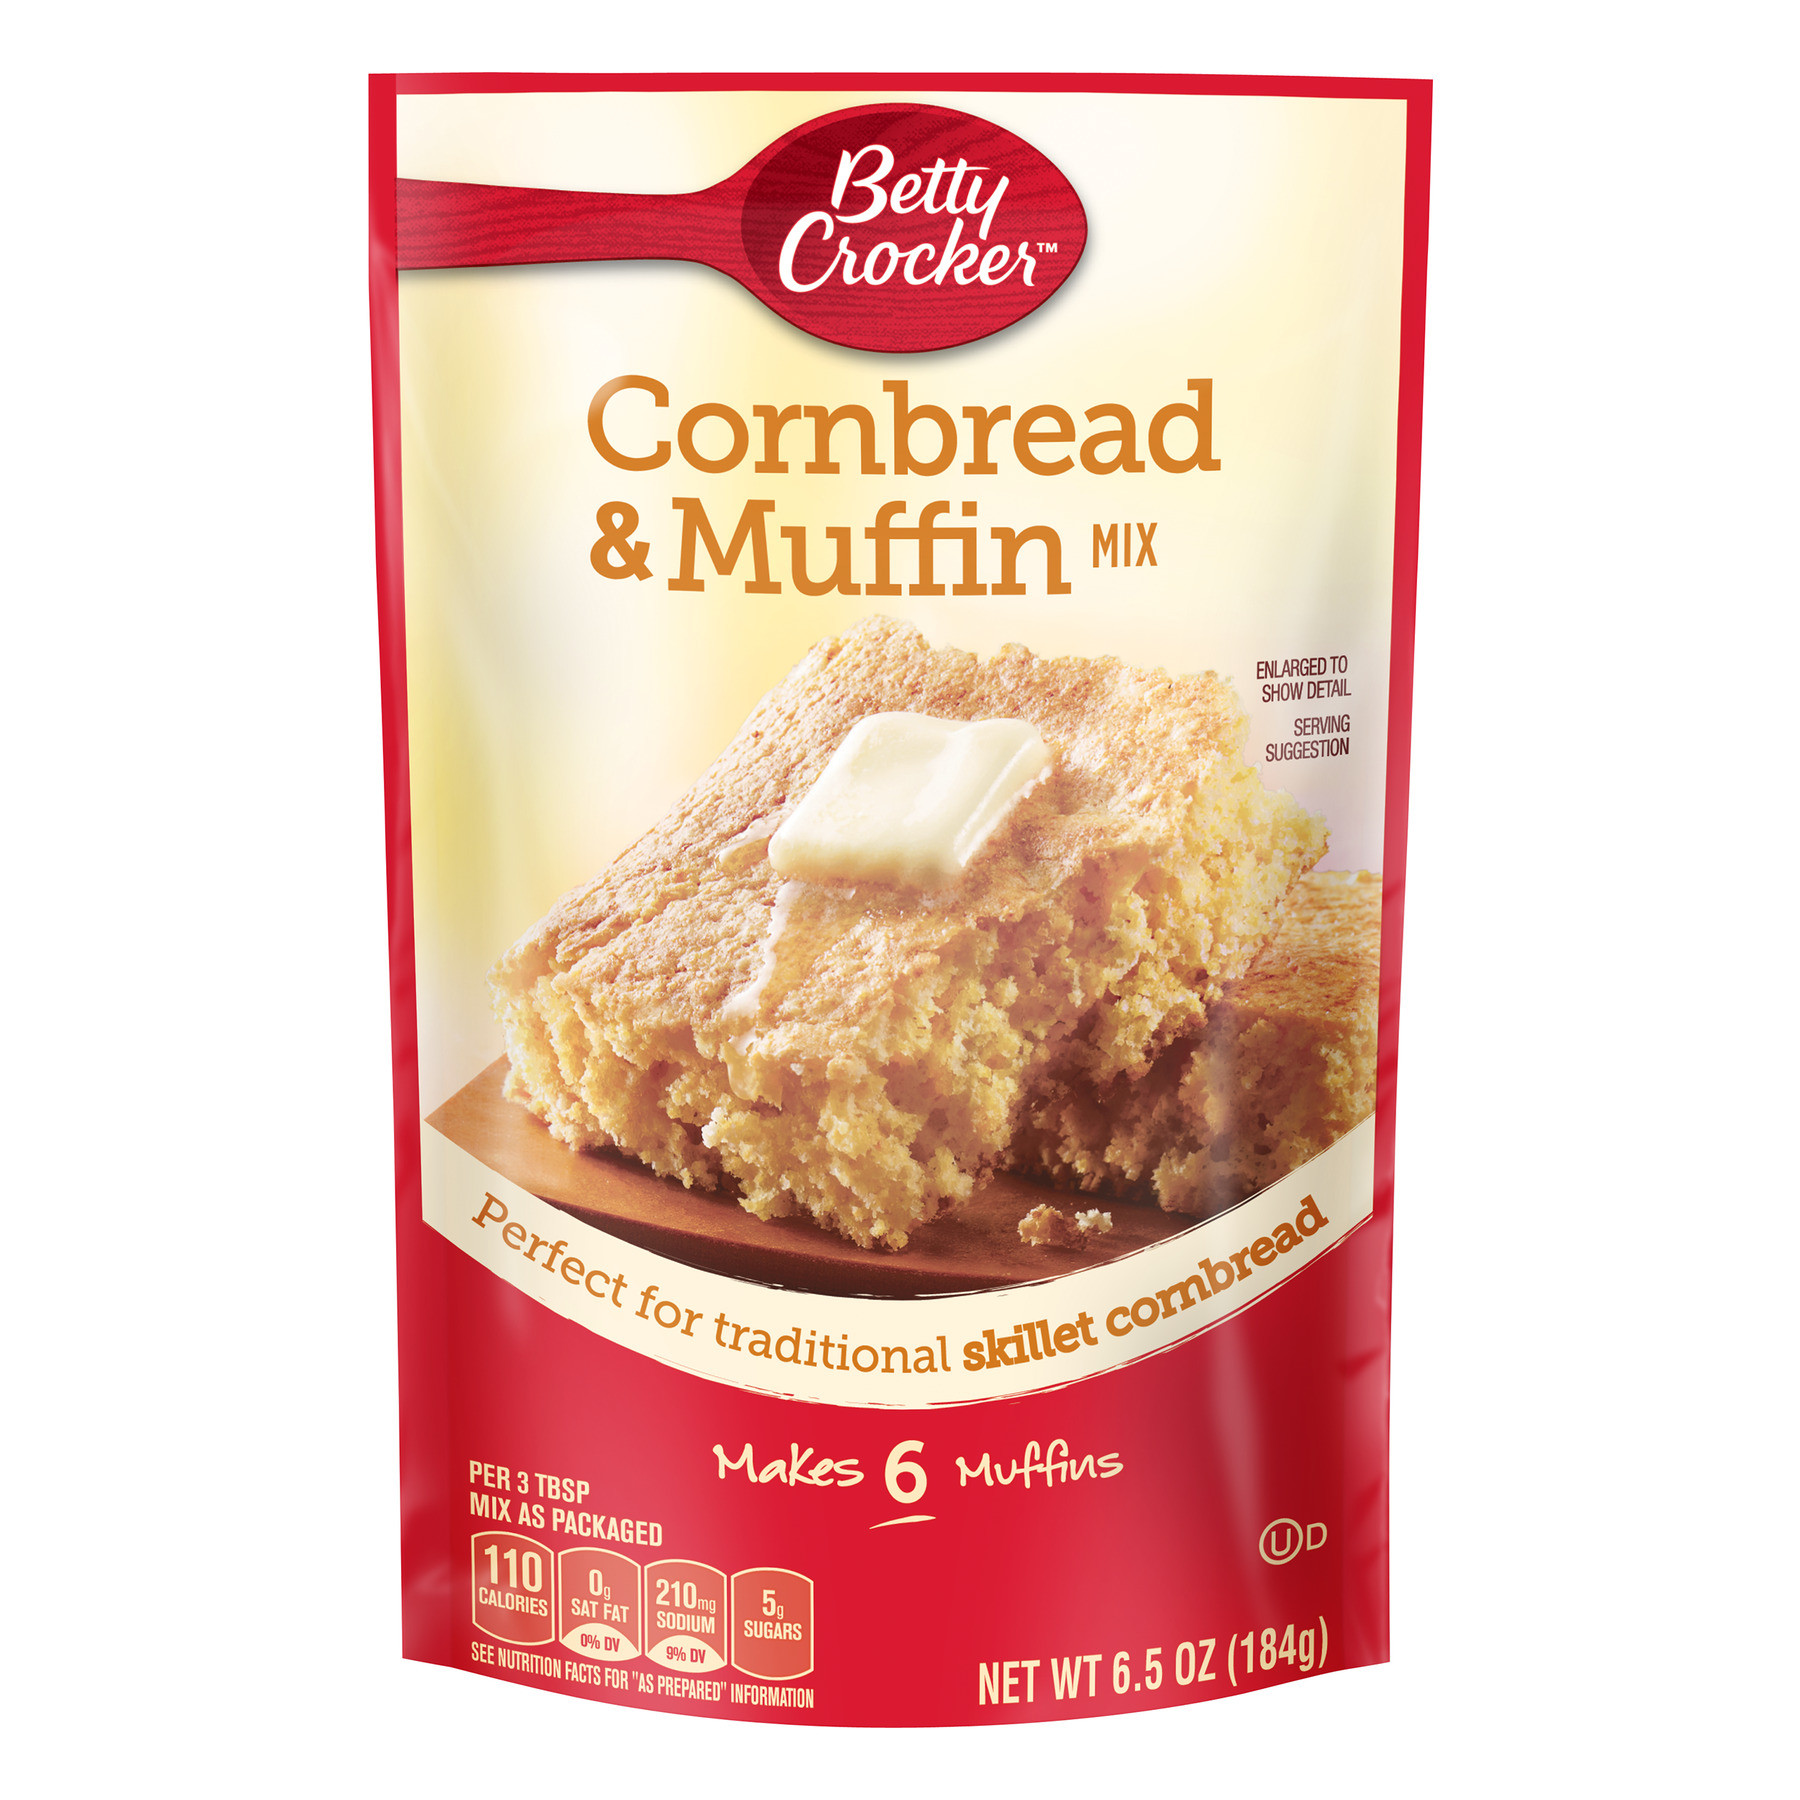 Betty Crocker Cornbread Awesome Betty Crocker Cornbread and Muffin Mix 6 5 Oz Box